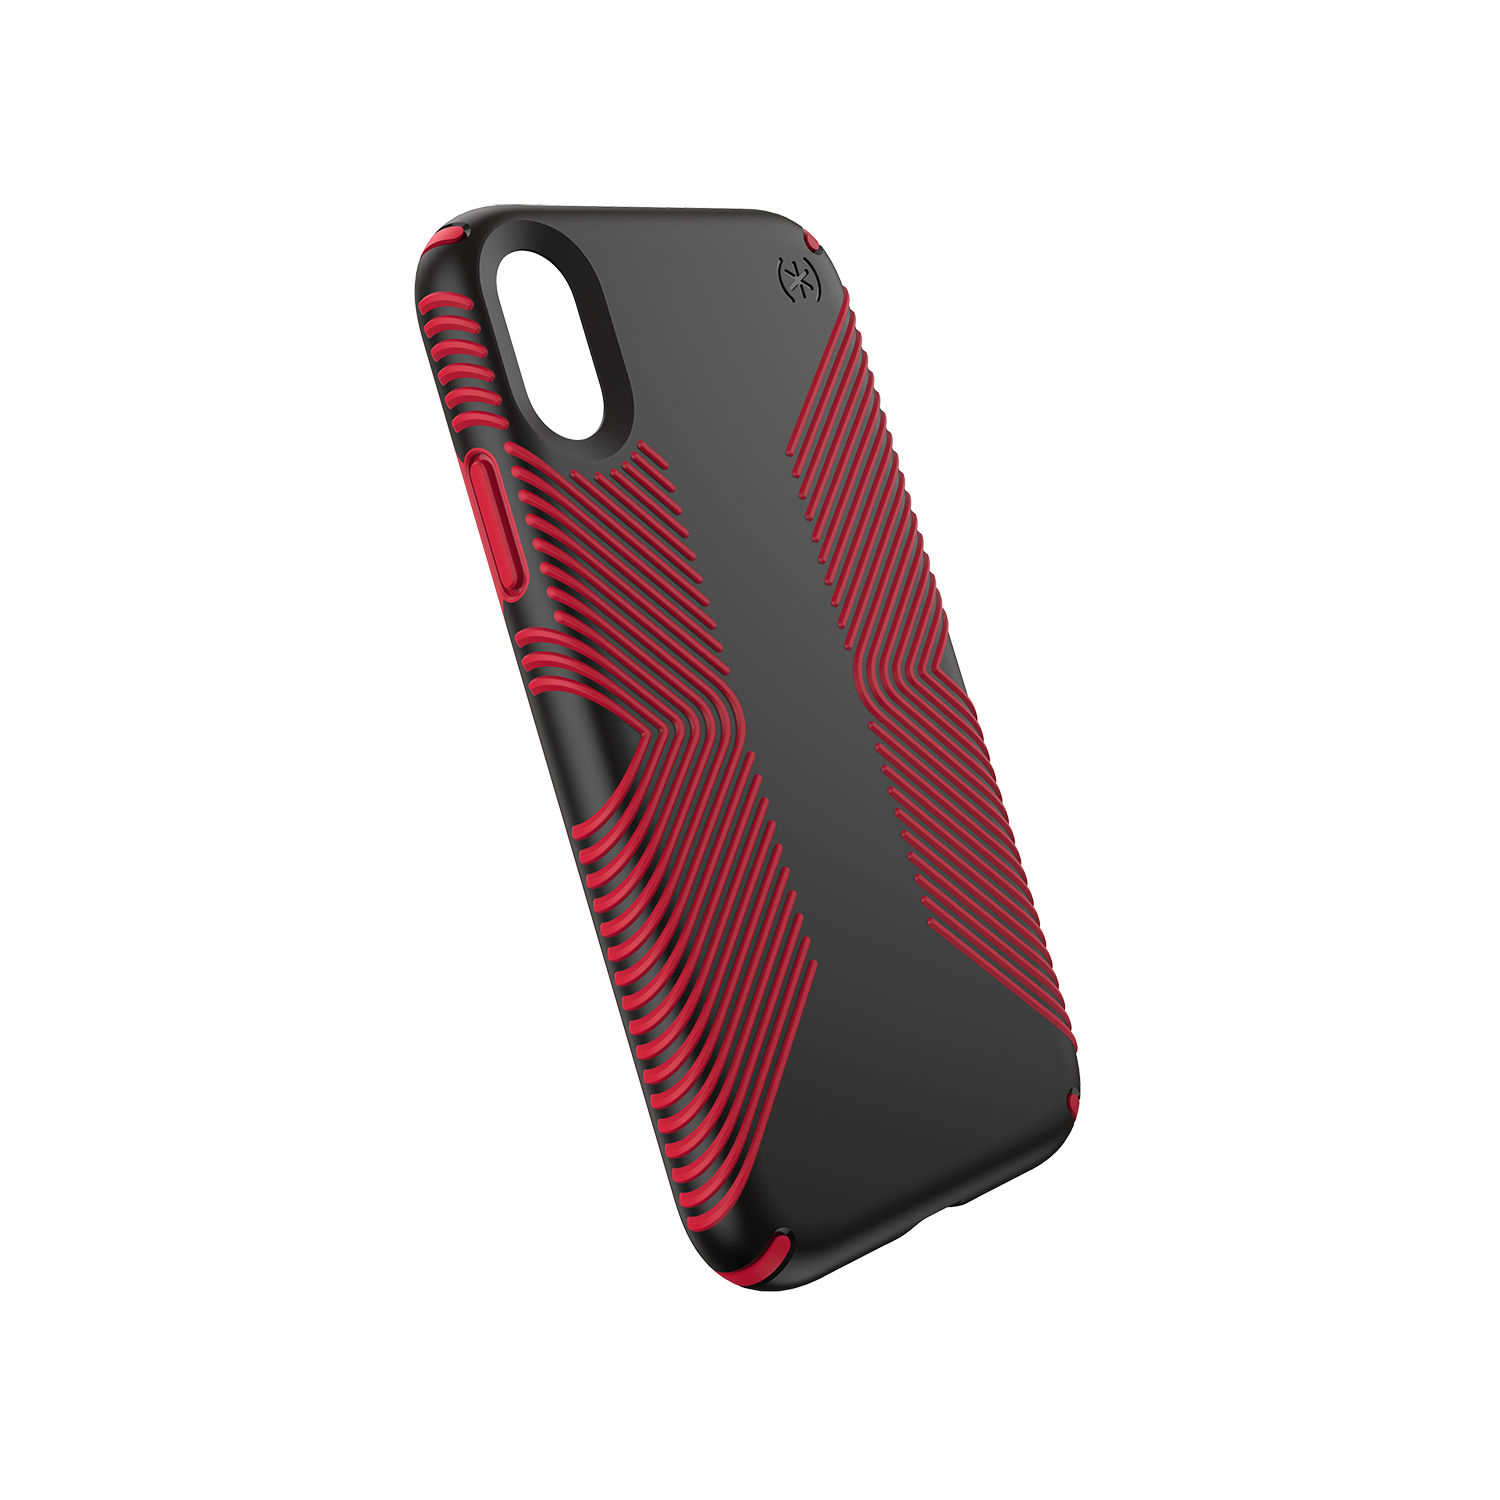 Speck Presidio Grip Case Black/Dark Poppy Red for iPhone XR